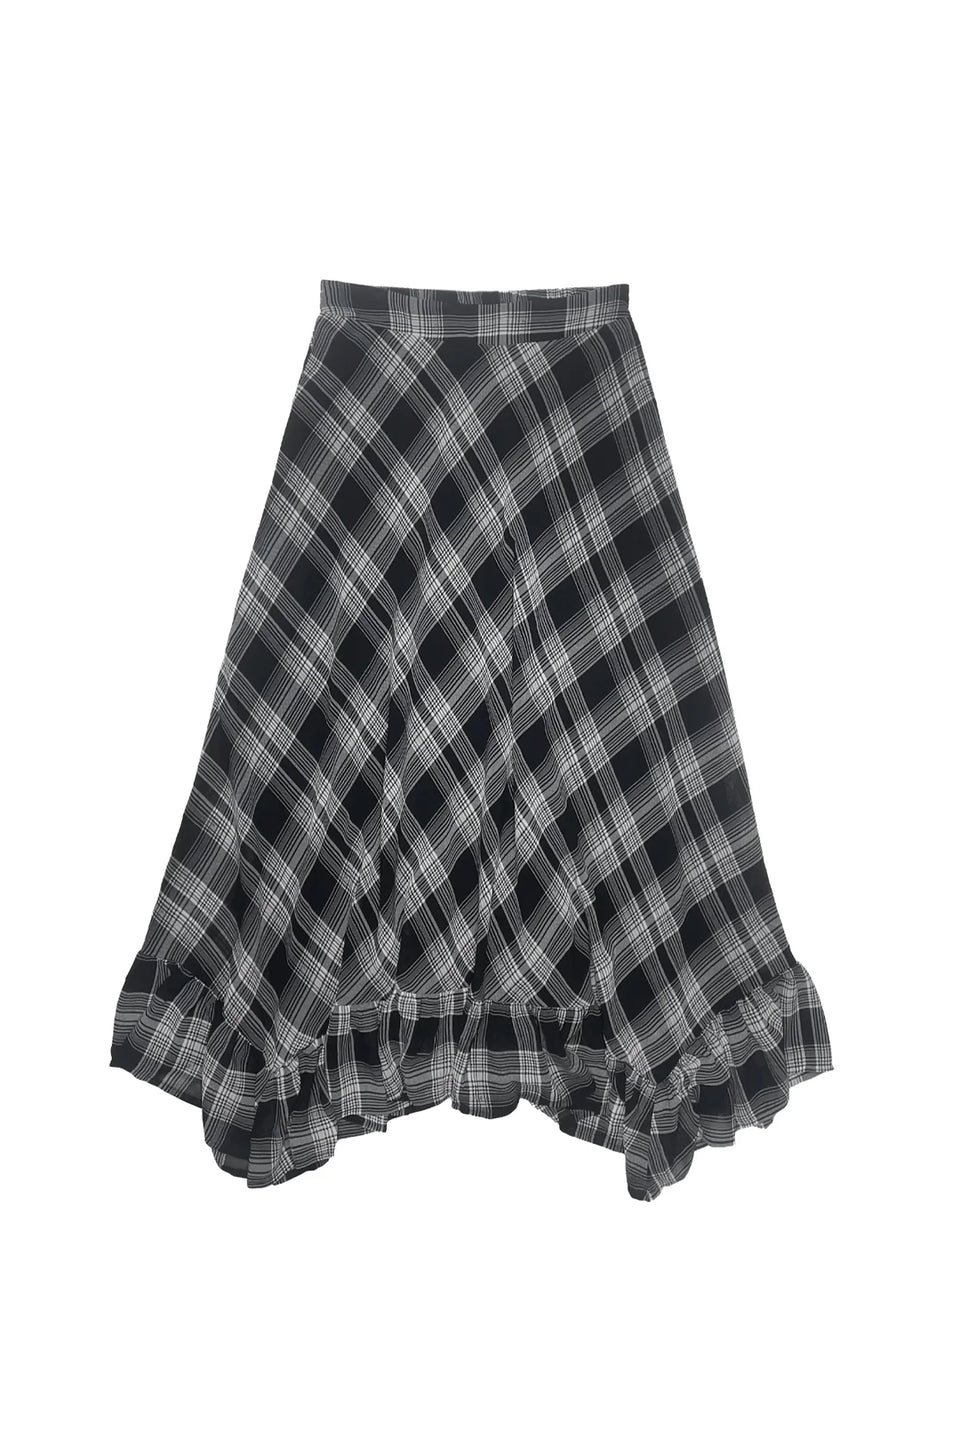 Elle Oh Elle Checkered Skirt with Ruffle Asymmetrical Bottom